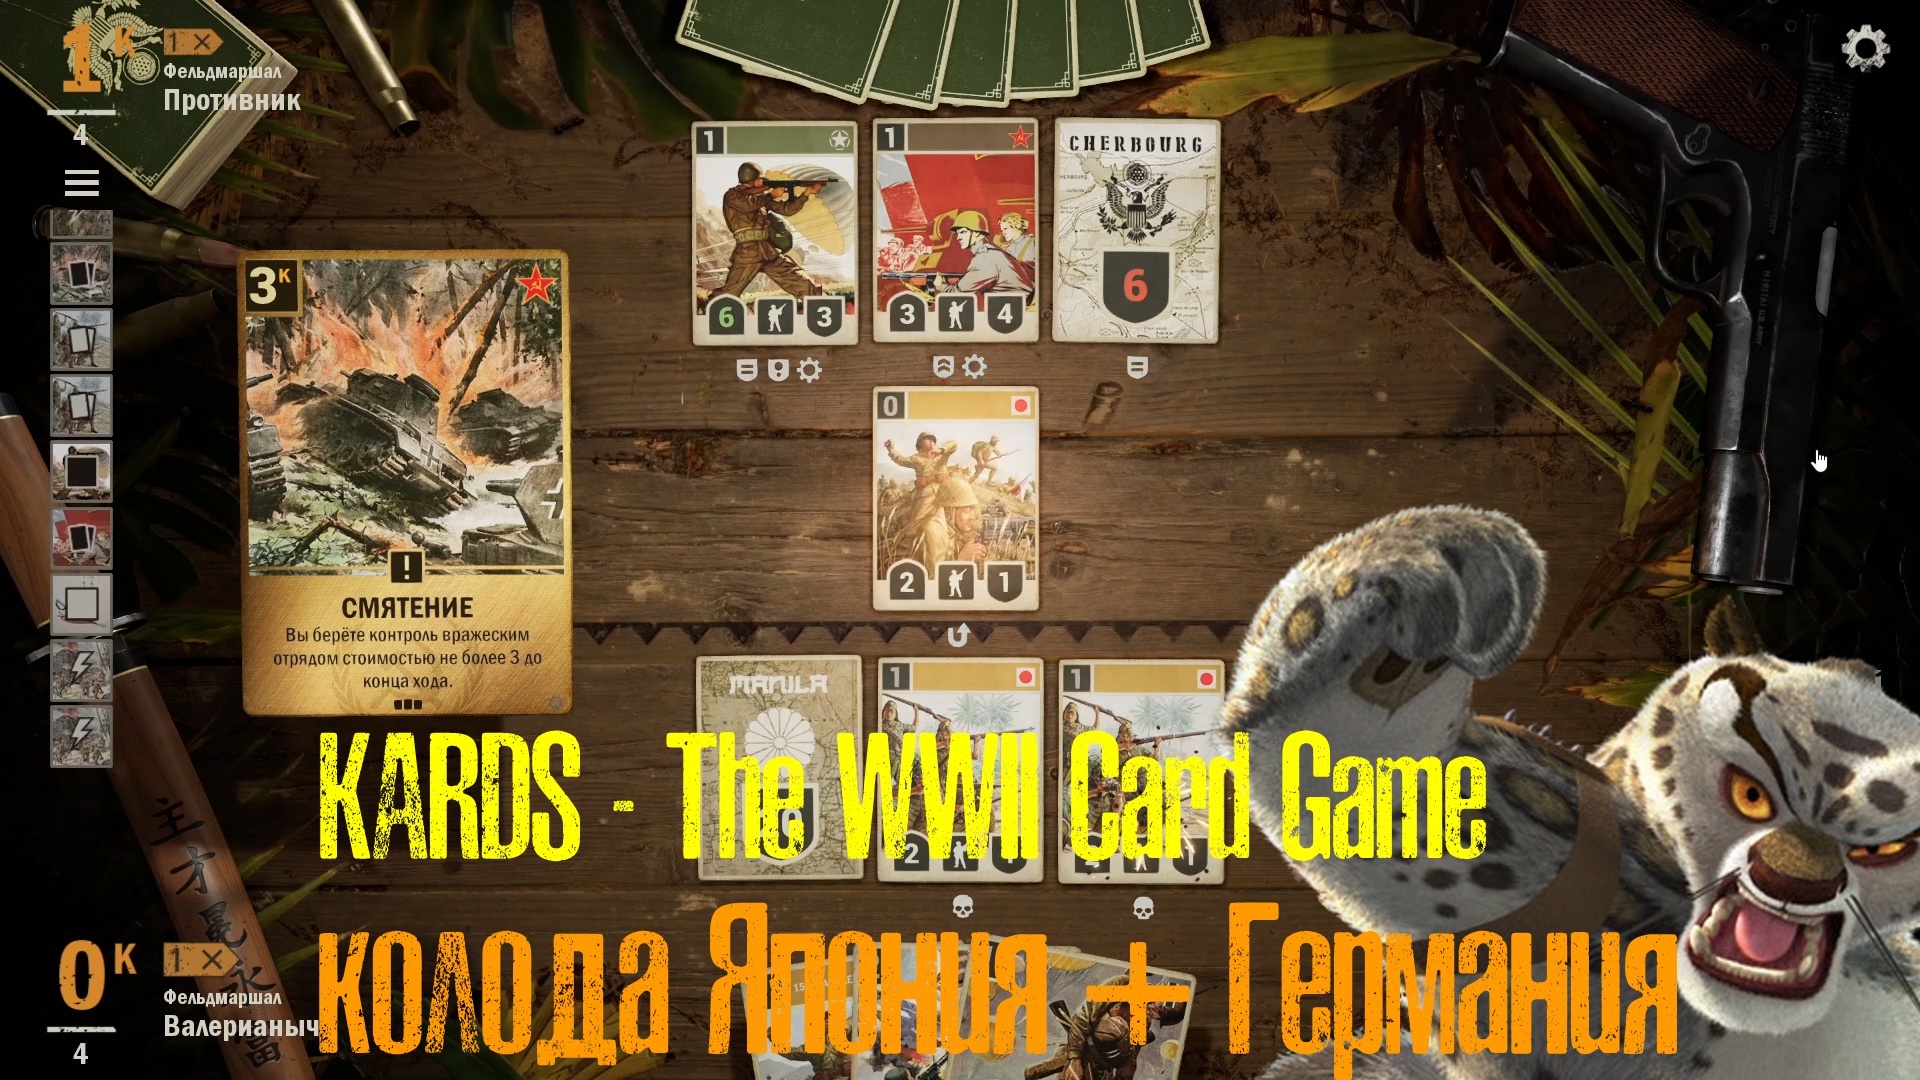 🔴KARDS.The WWII Card Game▶Япония(Германия) VS Америка(СССР)